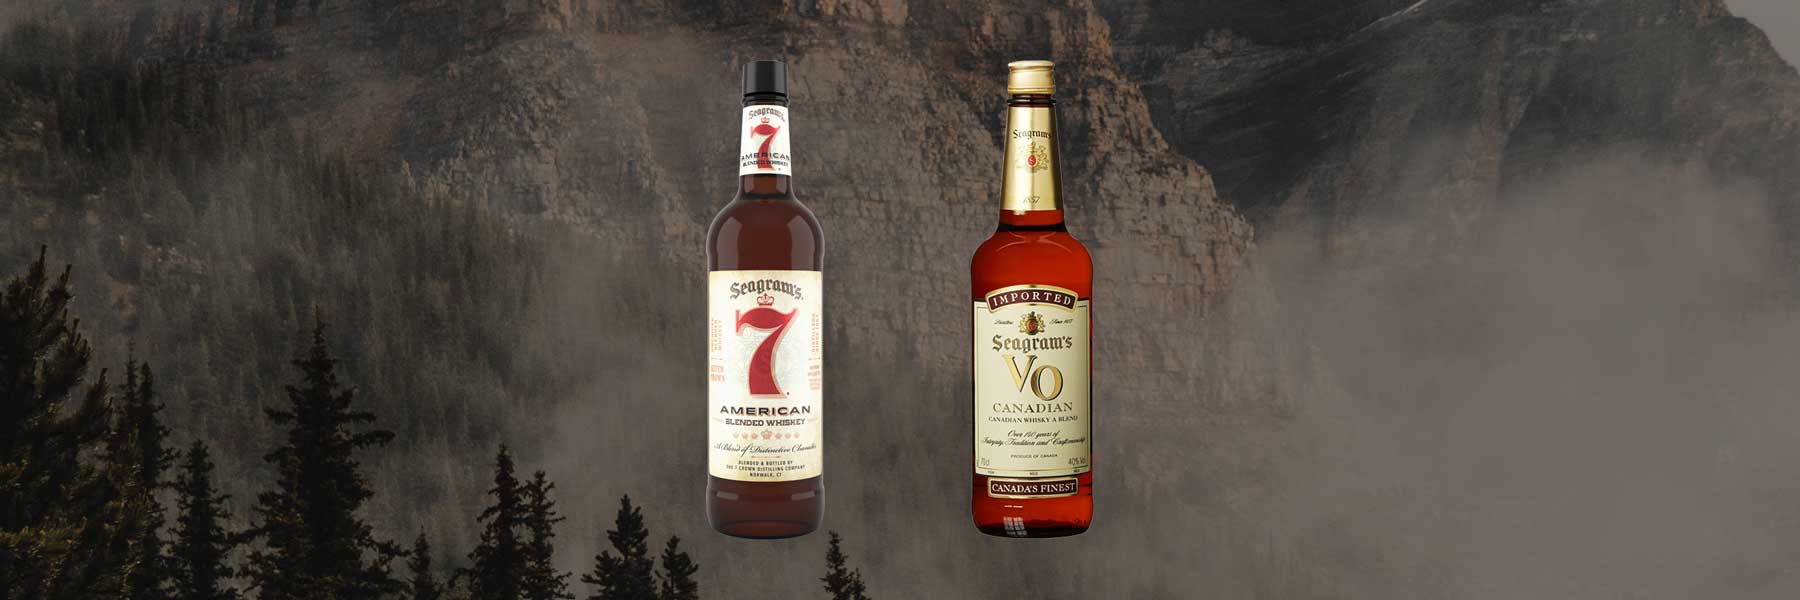 Seagram’s 7 vs VO Whisky | A Comprehensive Review